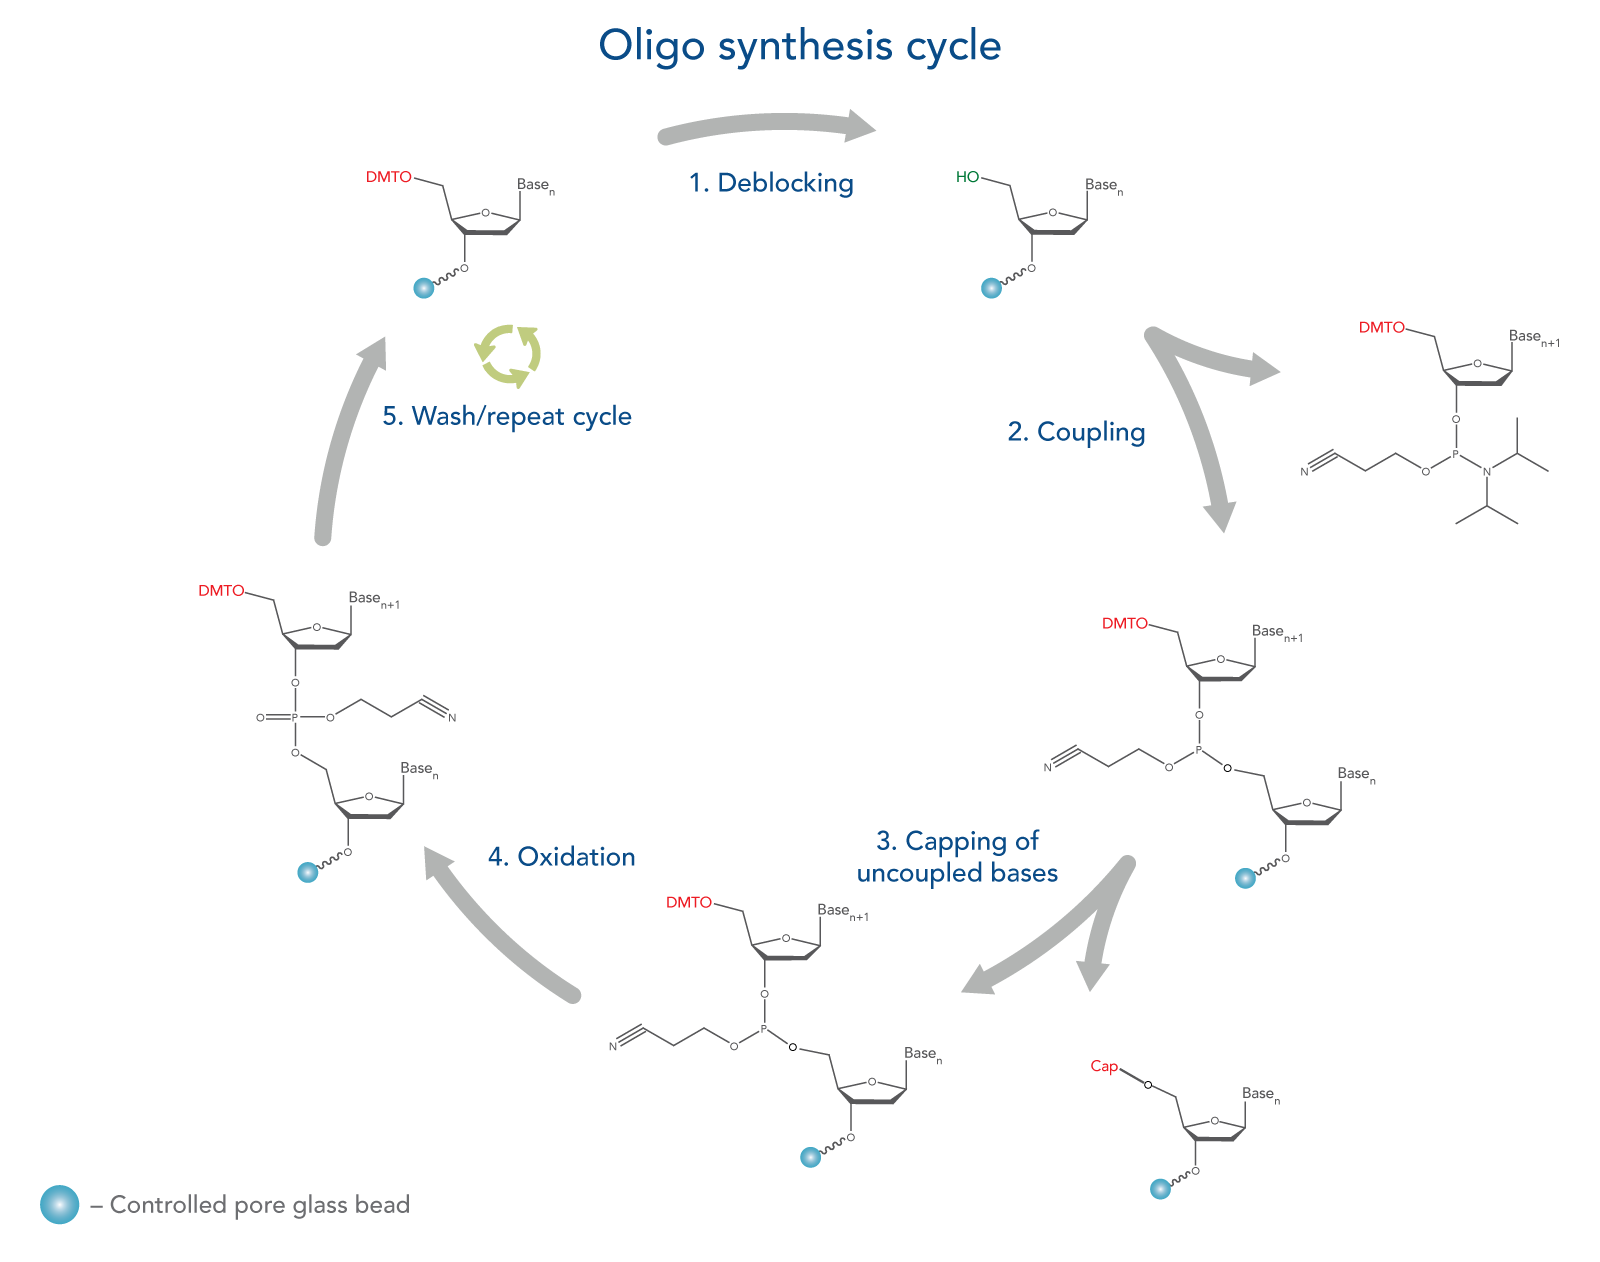 Phosphoramidite oligo synthesis